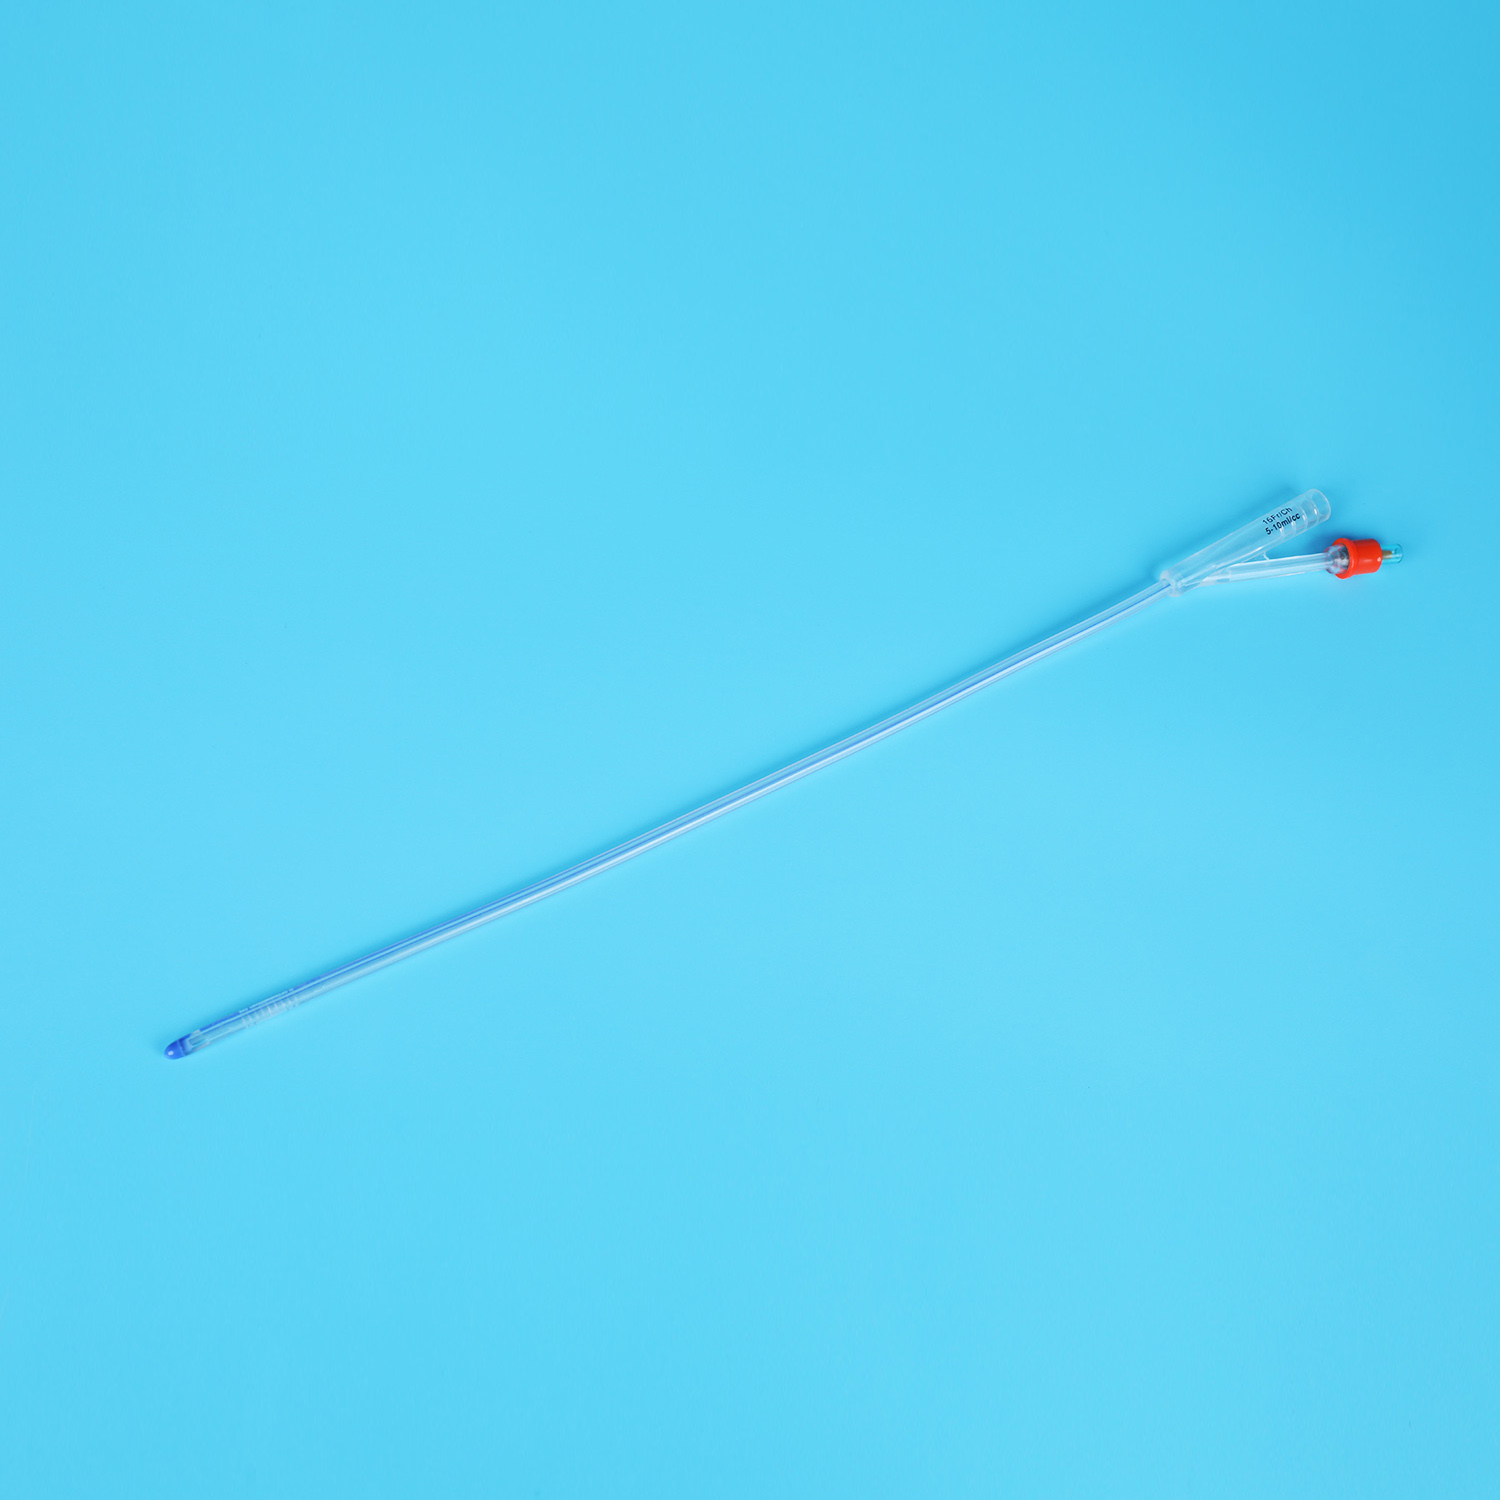 2 Txoj Kev Silicone Foley Catheter nrog Unibal Integral Balloon Technology Integrated Flat Balloon Round Tipped Urethral Siv